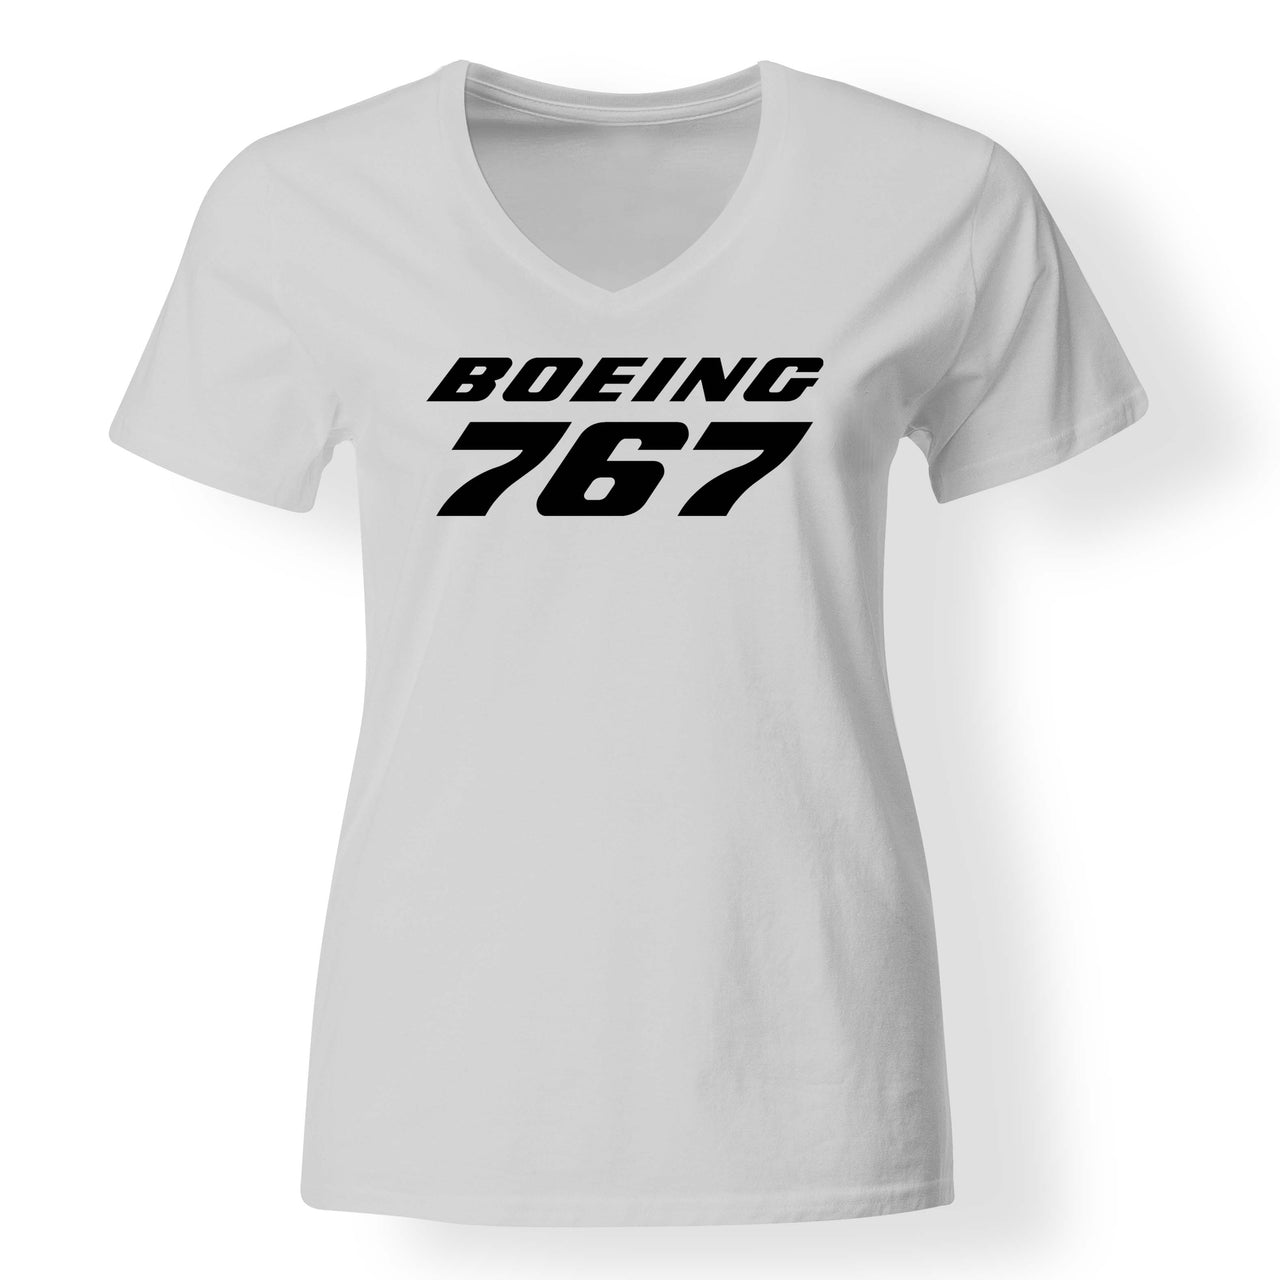 Boeing 767 & Text Designed V-Neck T-Shirts